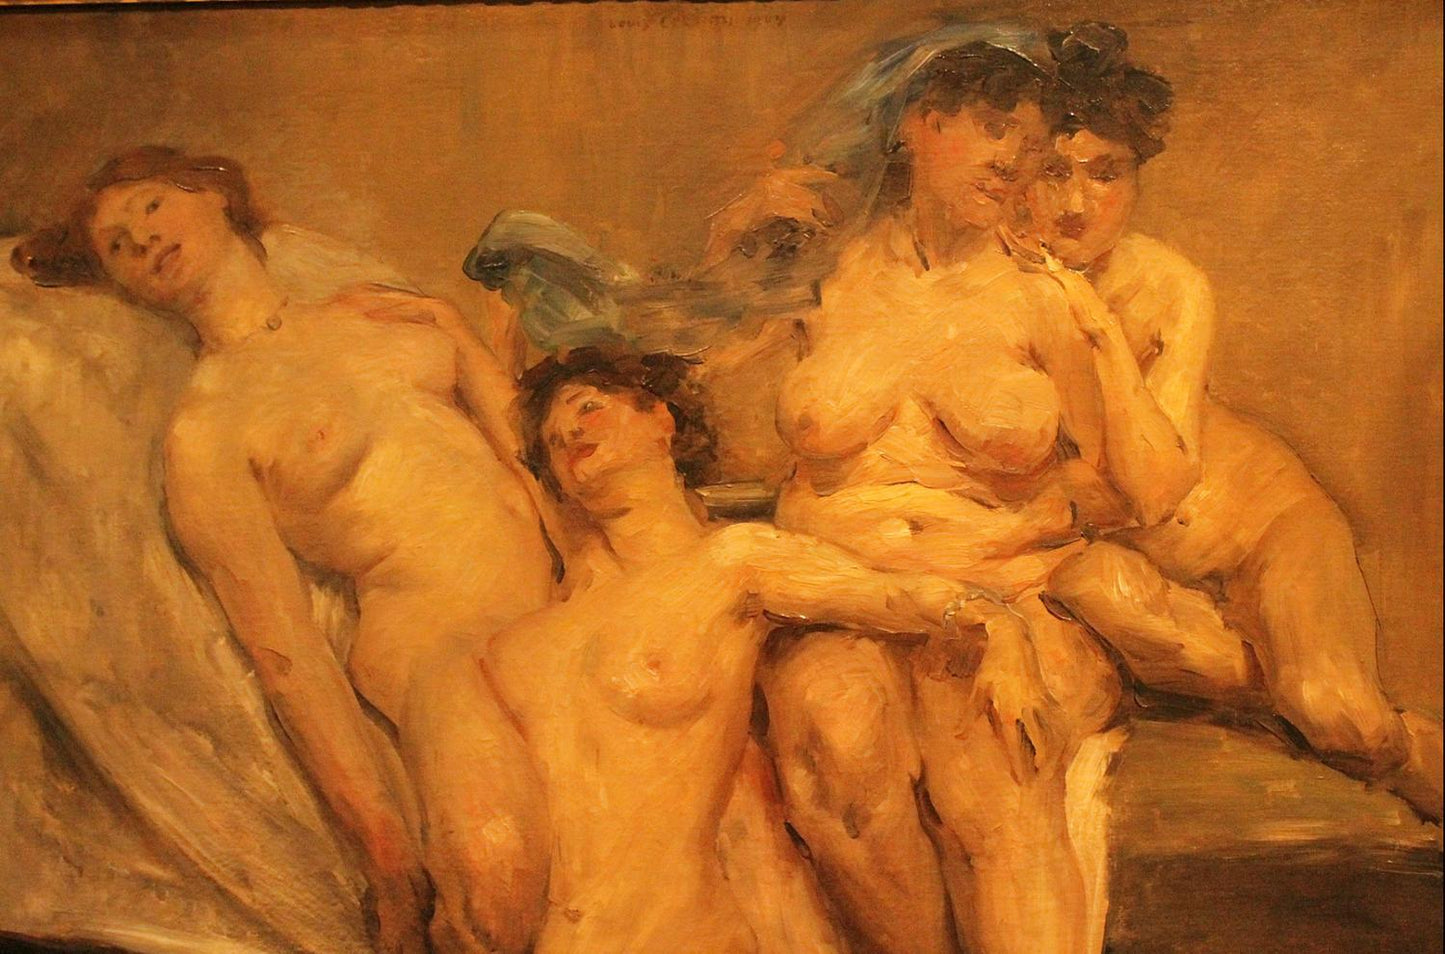 Group of Friends by Lovis Corinth (1904), Lovis Corinth